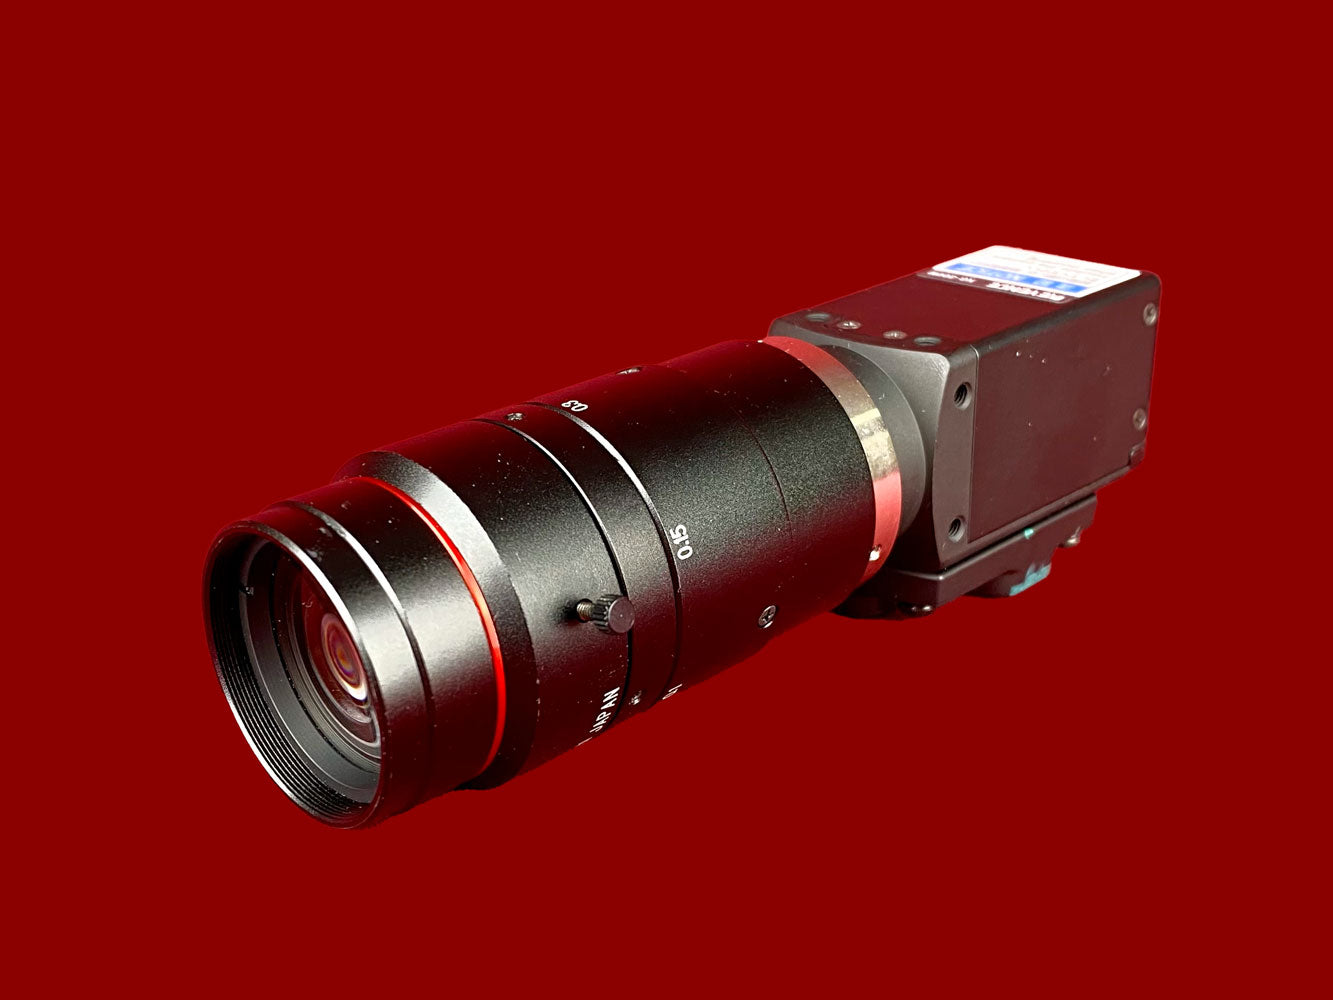 Keyence XG-200M XG industrial camera with 50mm lens